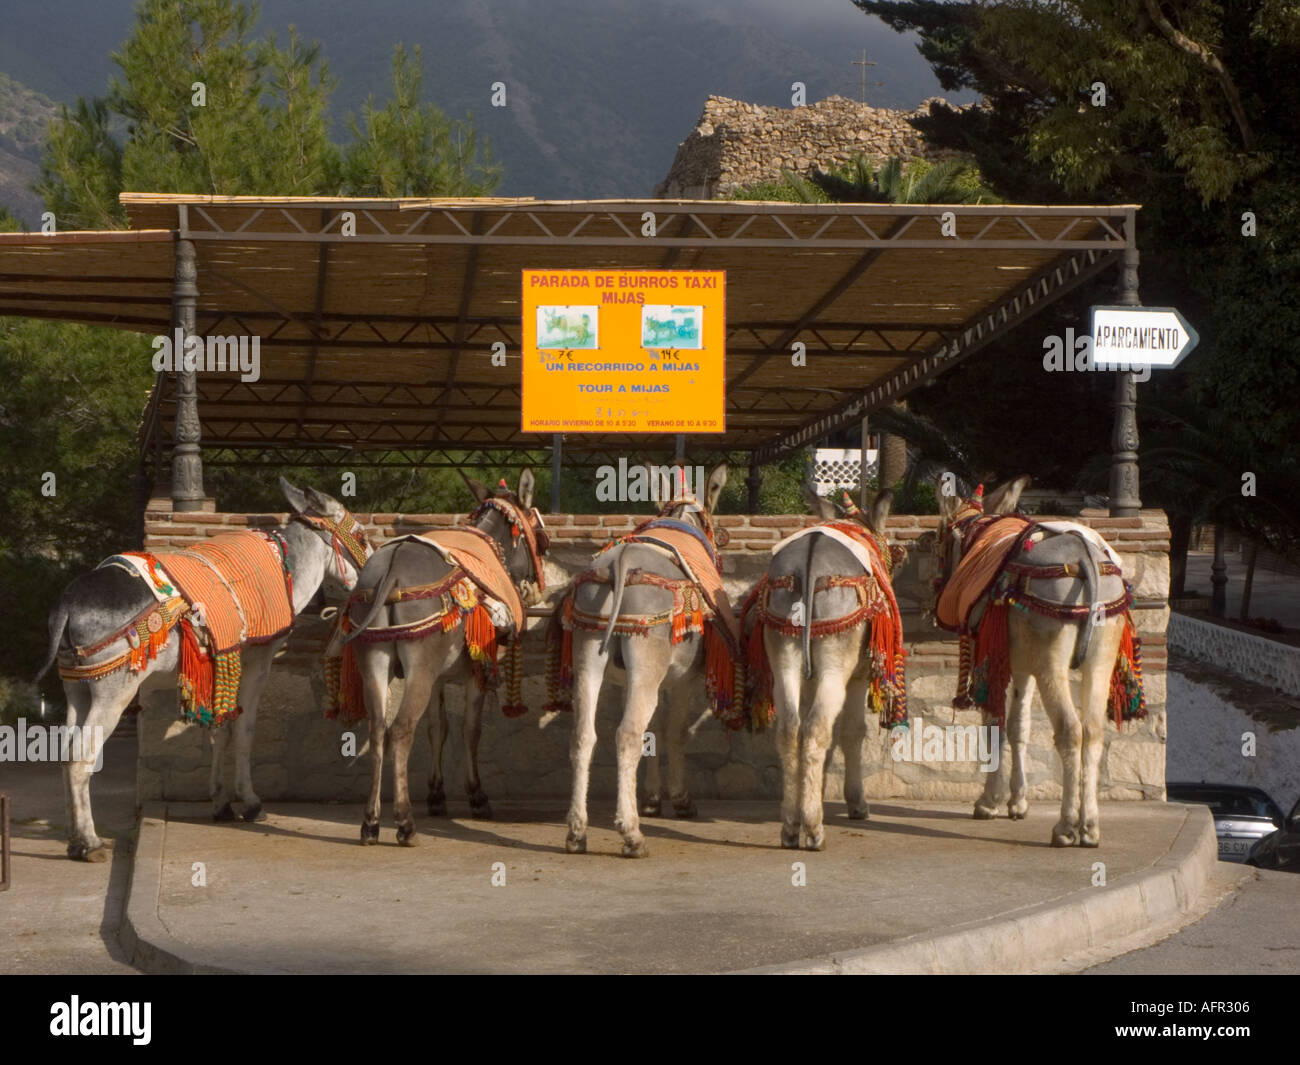 Burro donkey taxies wait in line in Mijas show village pueblo blanco near Malaga Costa del Sol Spain Stock Photo